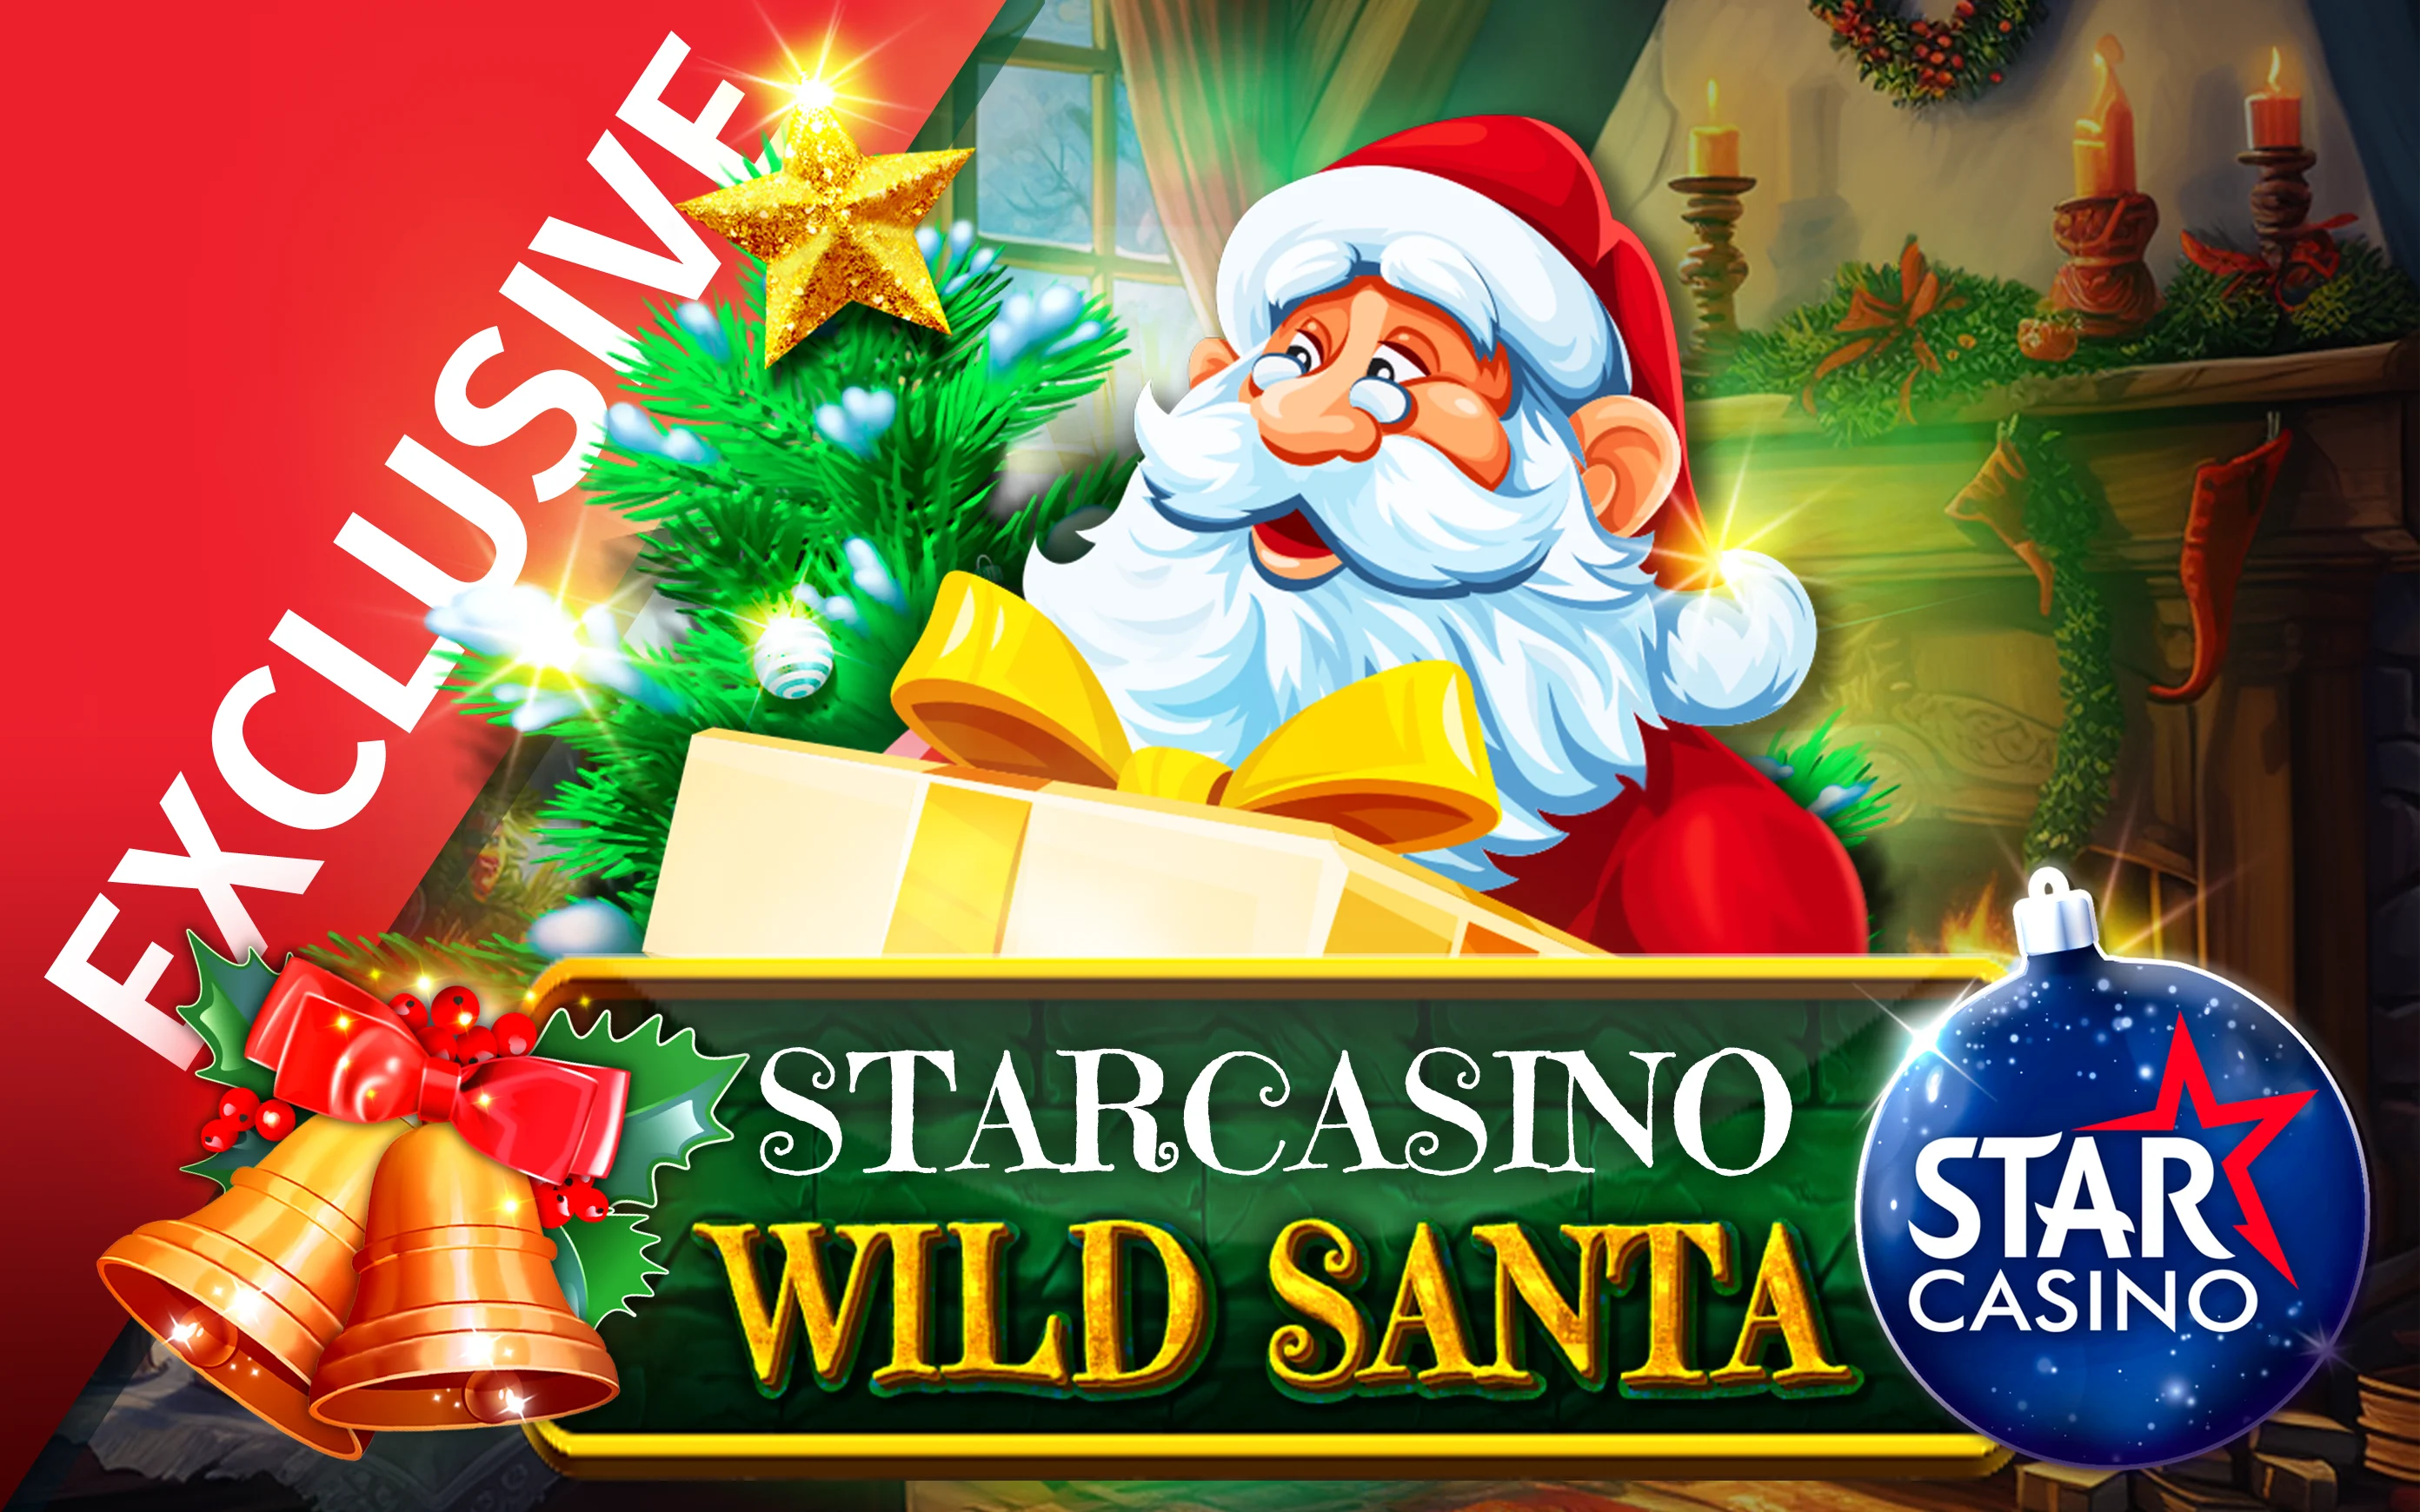 Chơi Starcasino Wild Santa 2 trên sòng bạc trực tuyến Starcasino.be